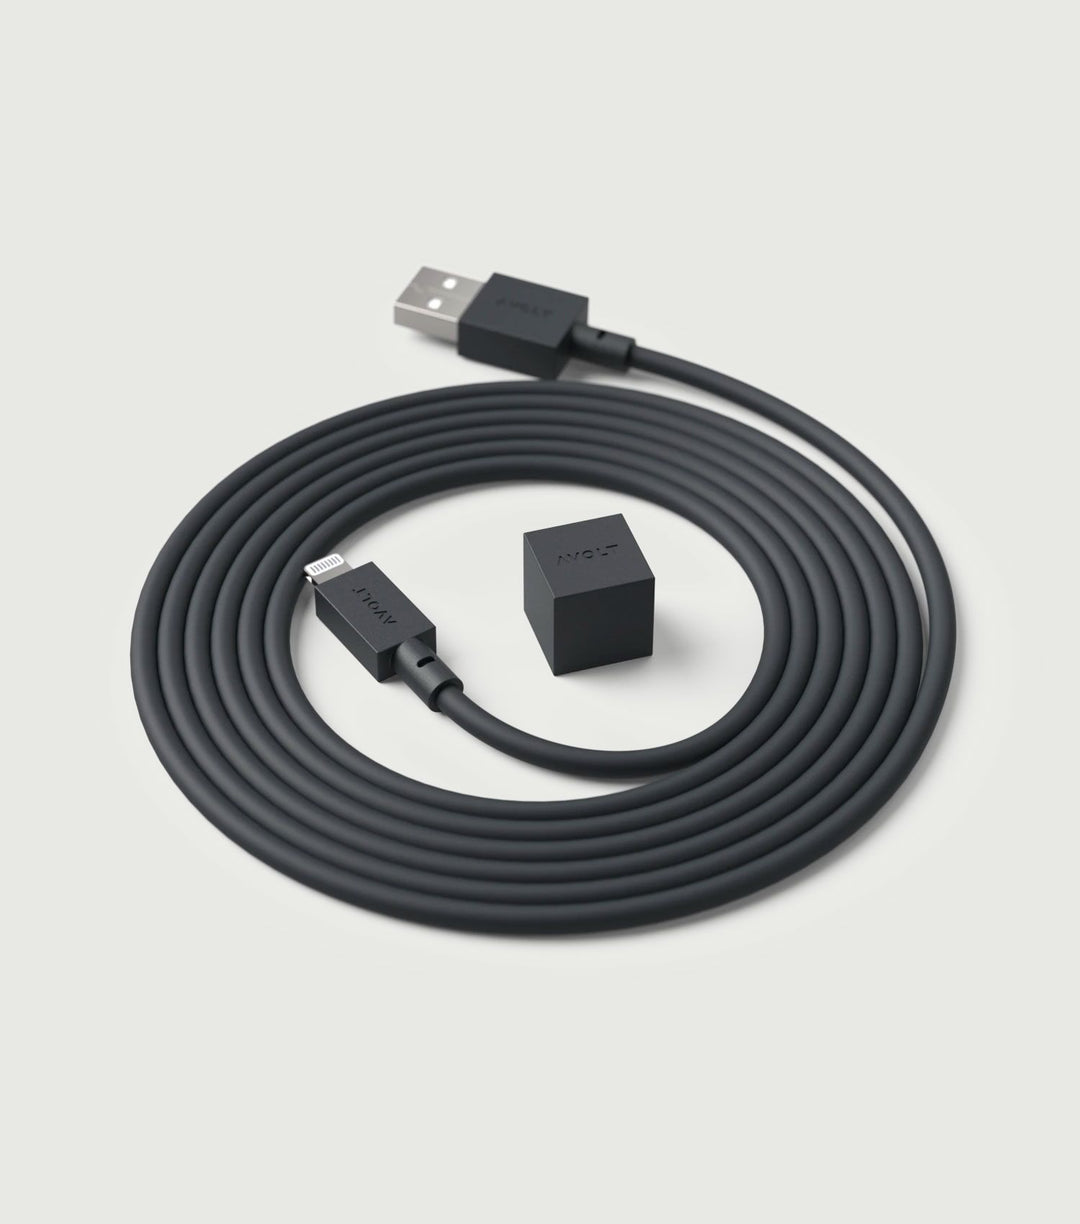 Cable 1 1,8m Lighting to USB A Stockholm Black - Avolt